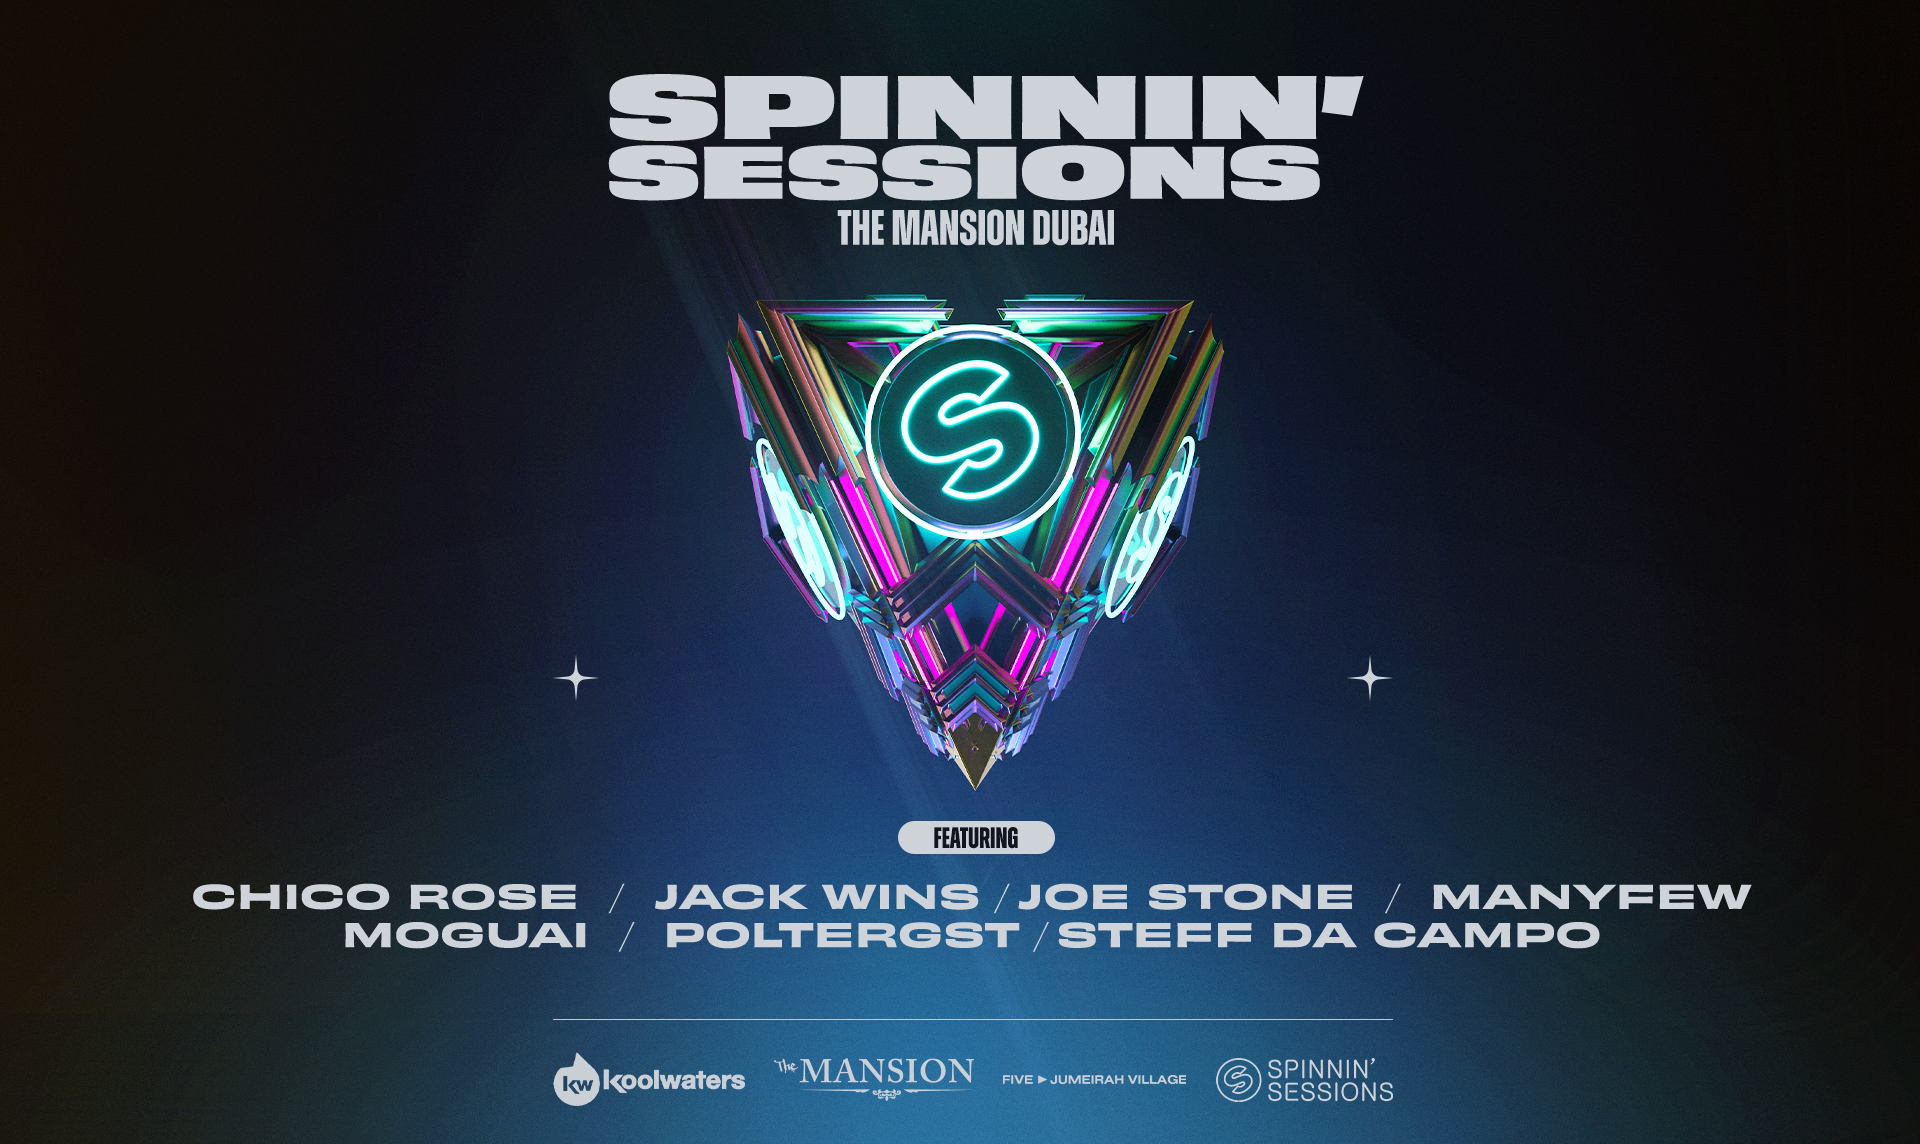 Spinnin Sessions on X: Spinnin' Sessions returns to Stavanger at